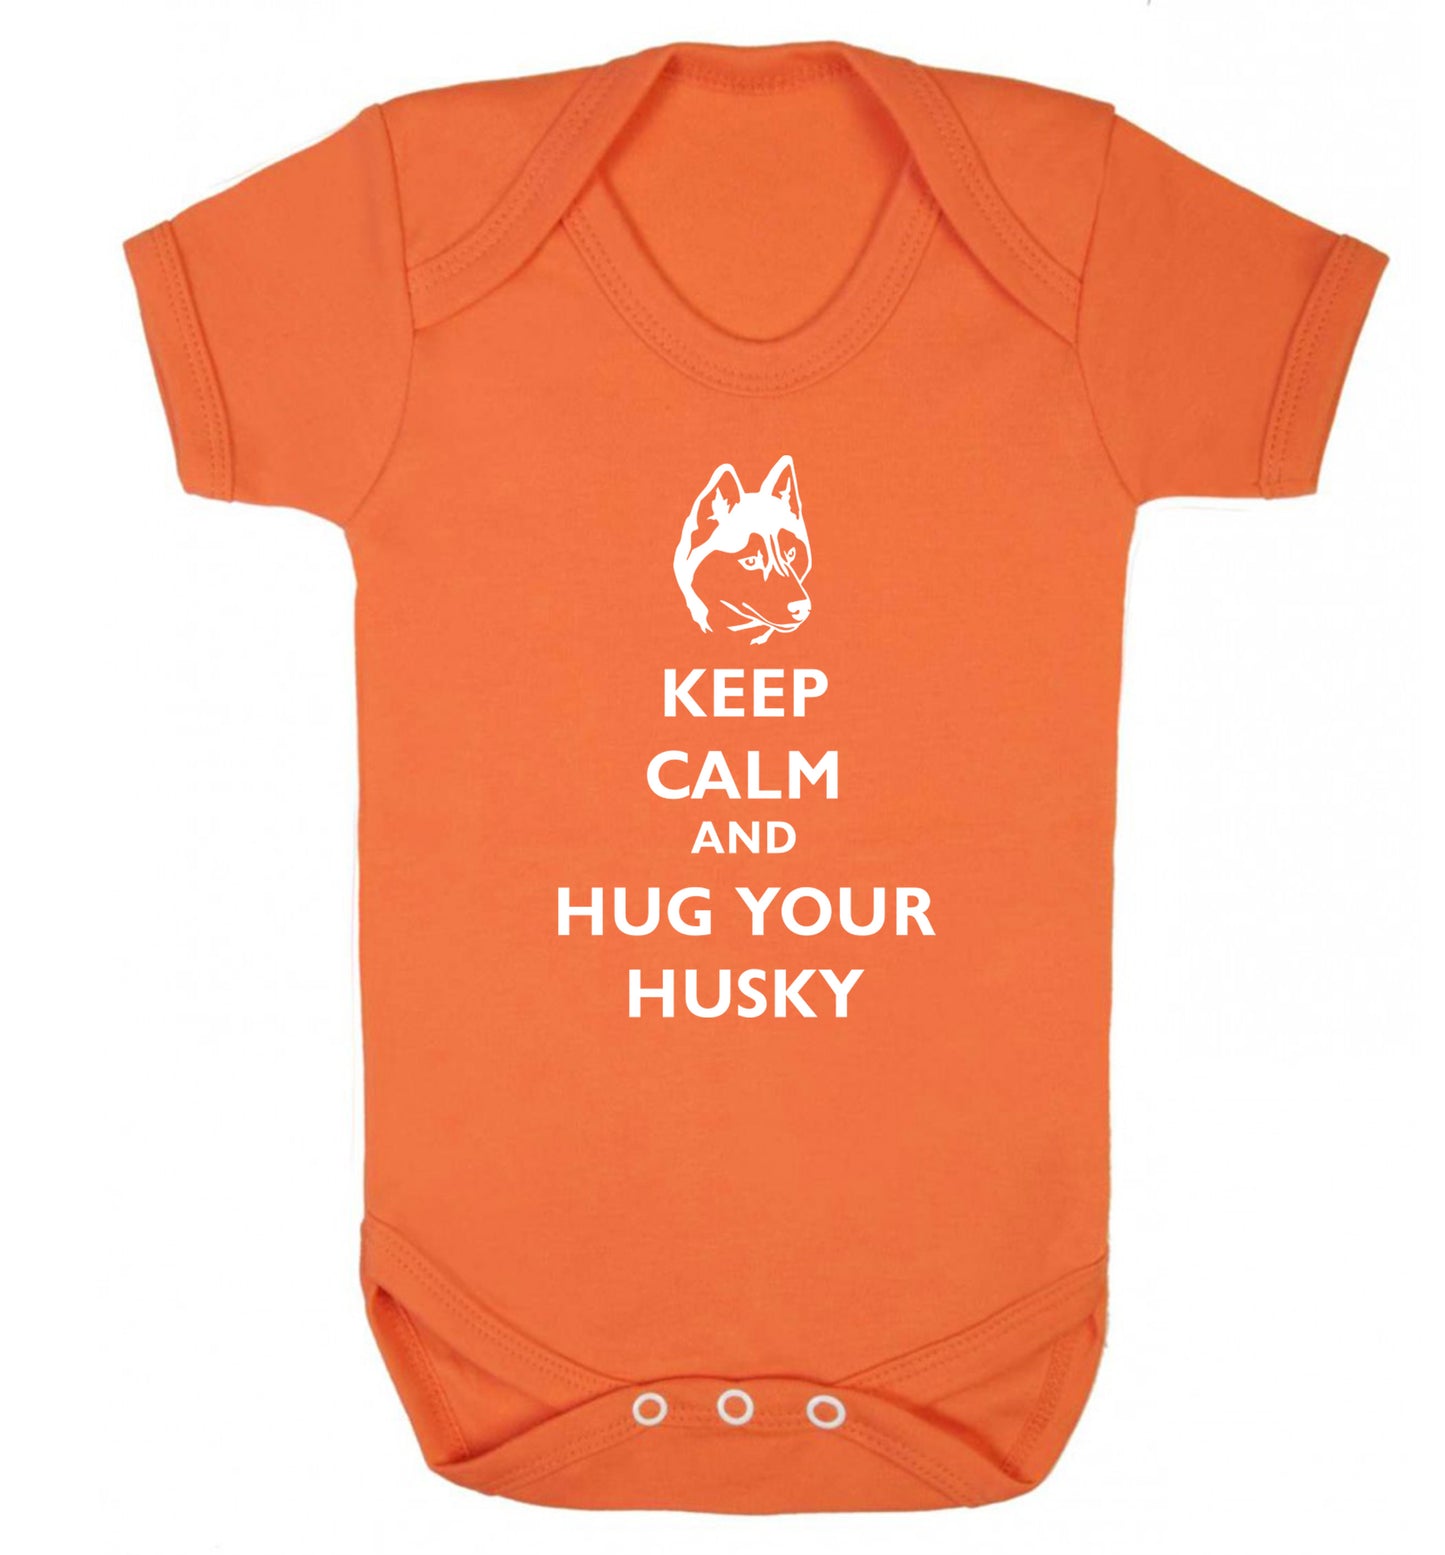 Keep calm and hug your husky Baby Vest orange 18-24 months